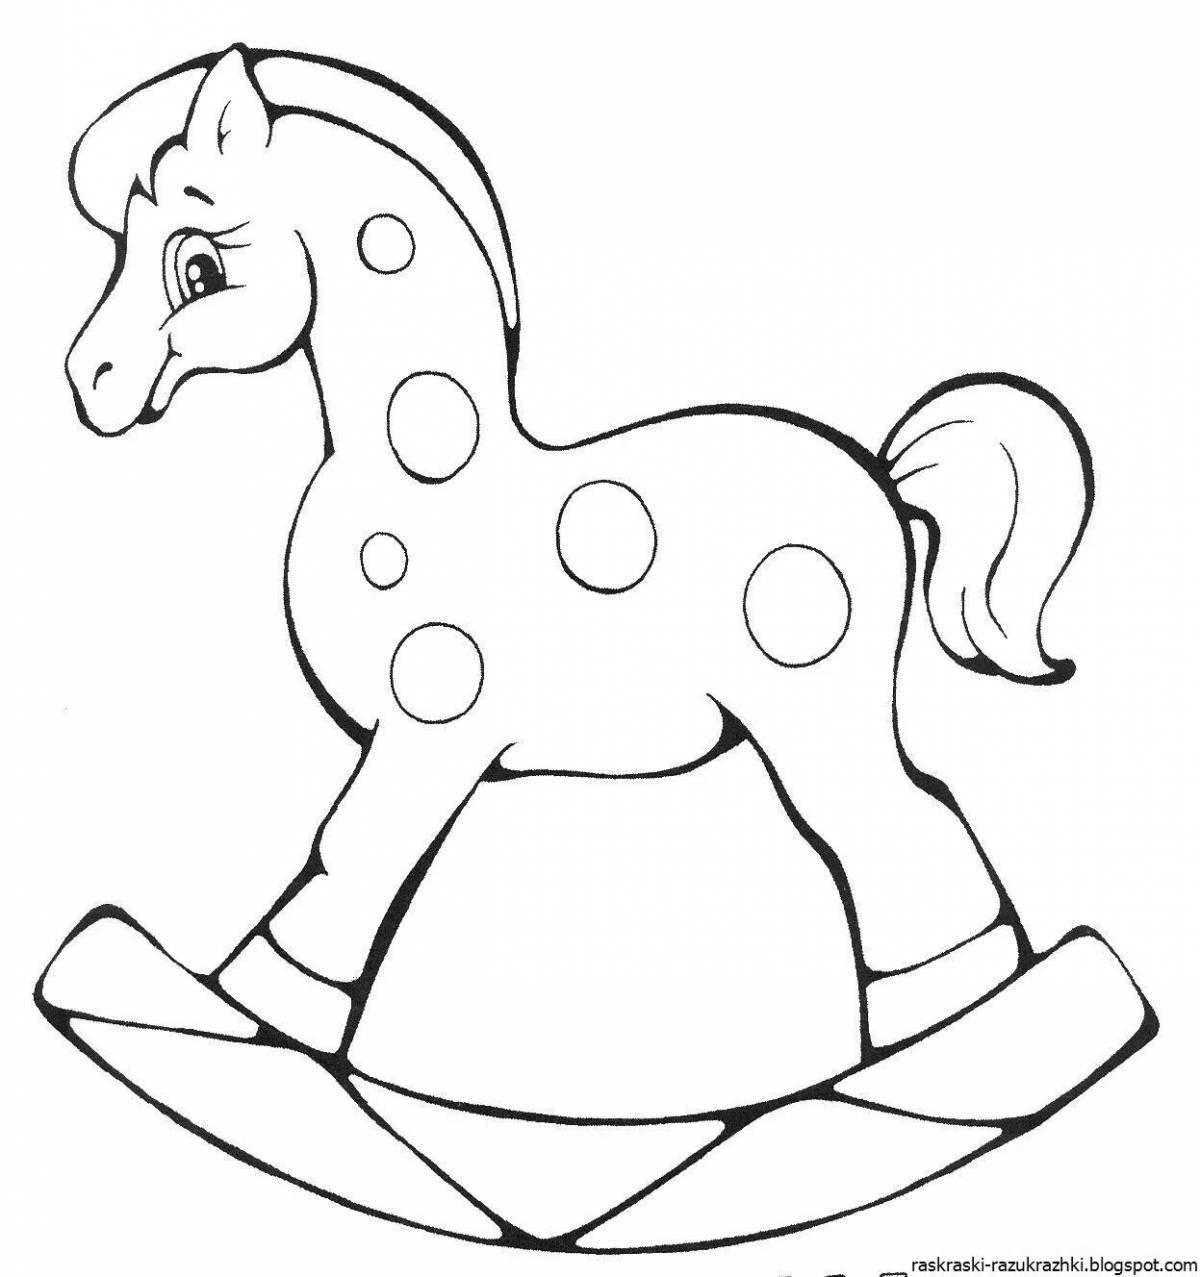 Fancy coloring horse